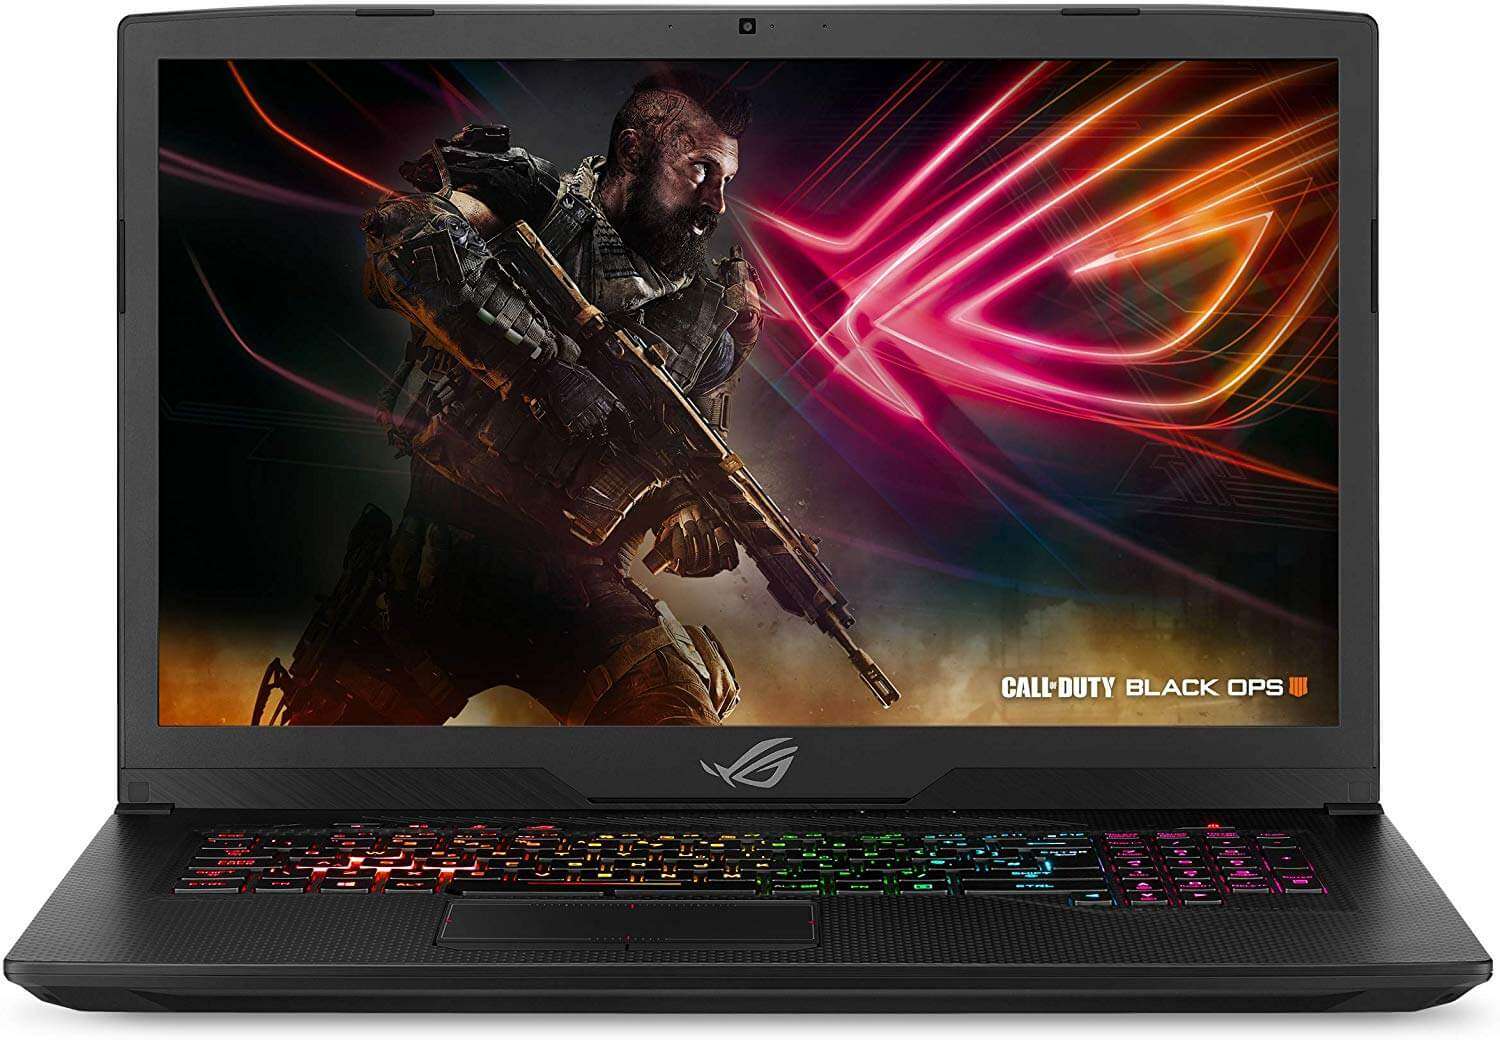 ASUS ROG Strix Scar Edition Gaming Laptop With 17.3-Inch Display, Intel Core i7 Processor/16GB RAM/1TB HDD + 256GB SSD Hybrid Drive/6GB NVIDIA Graphic Card Black